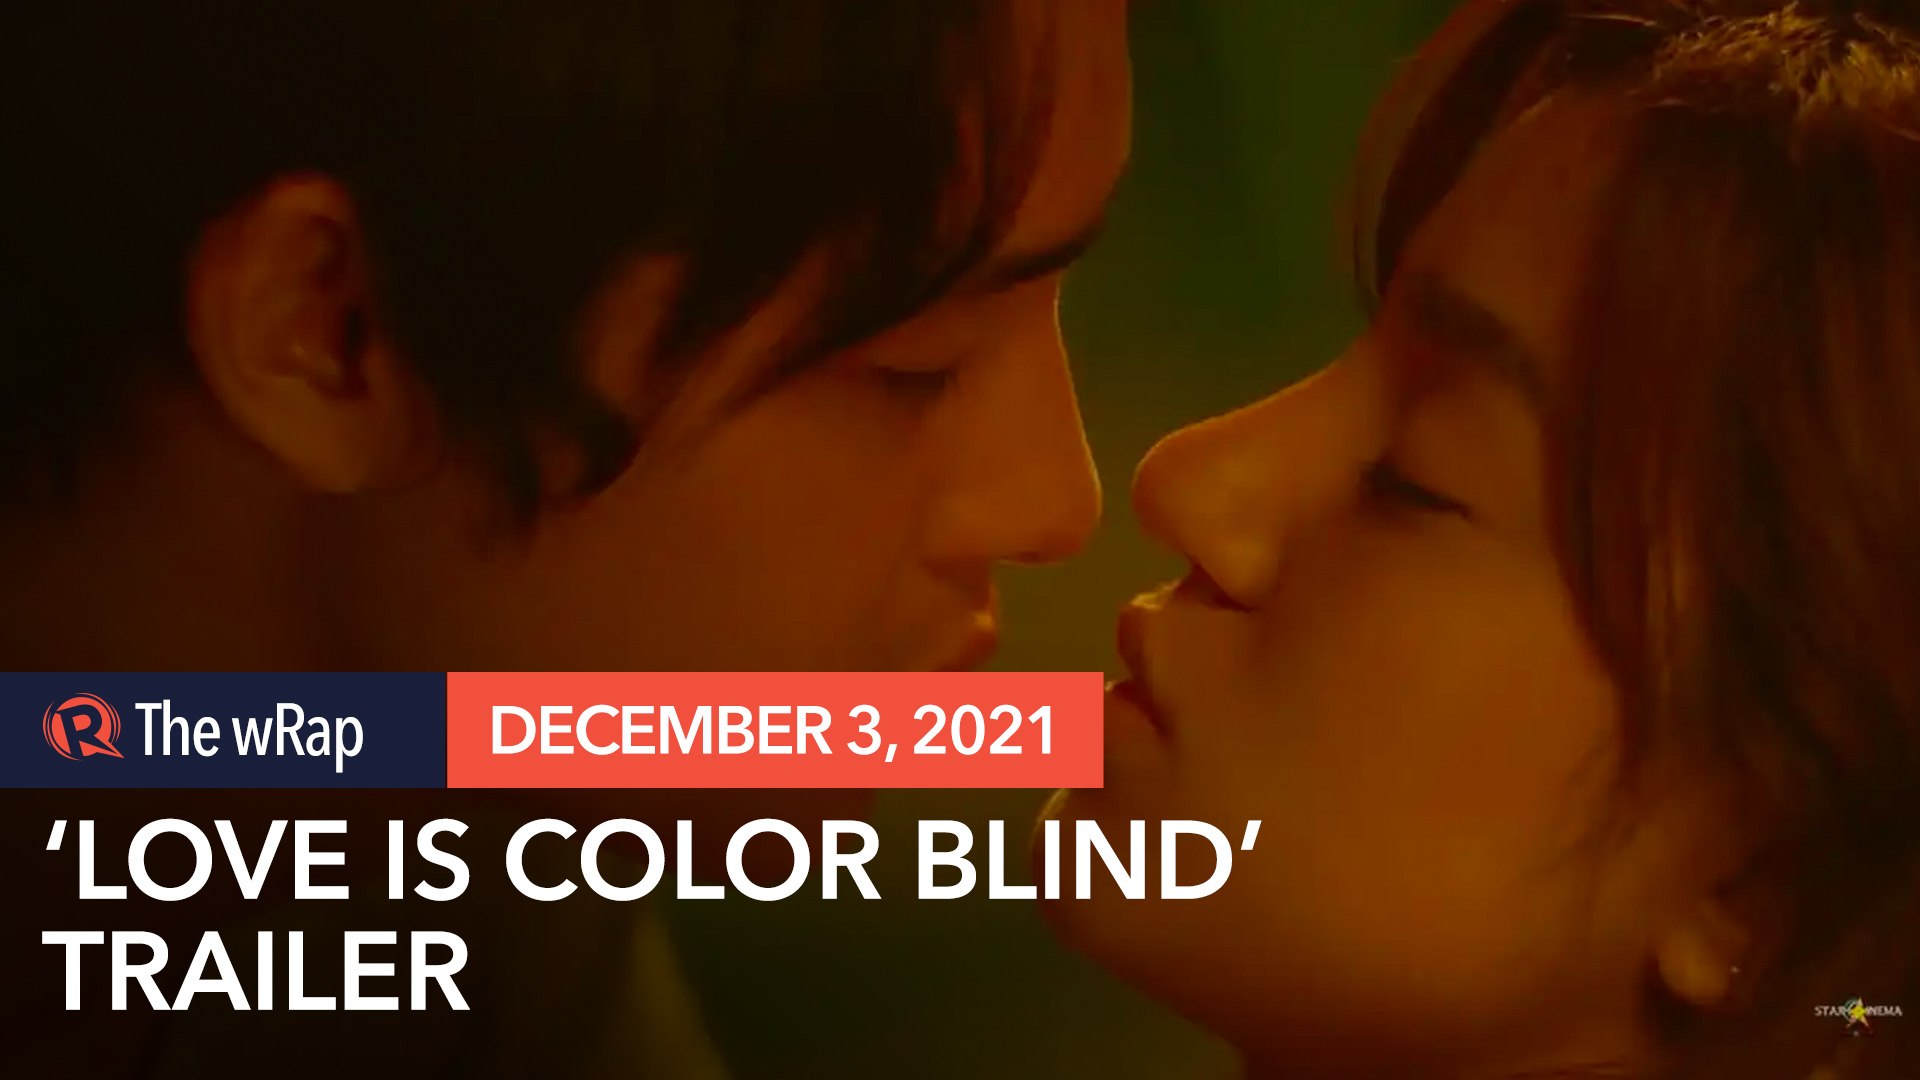 Blind dating trailer